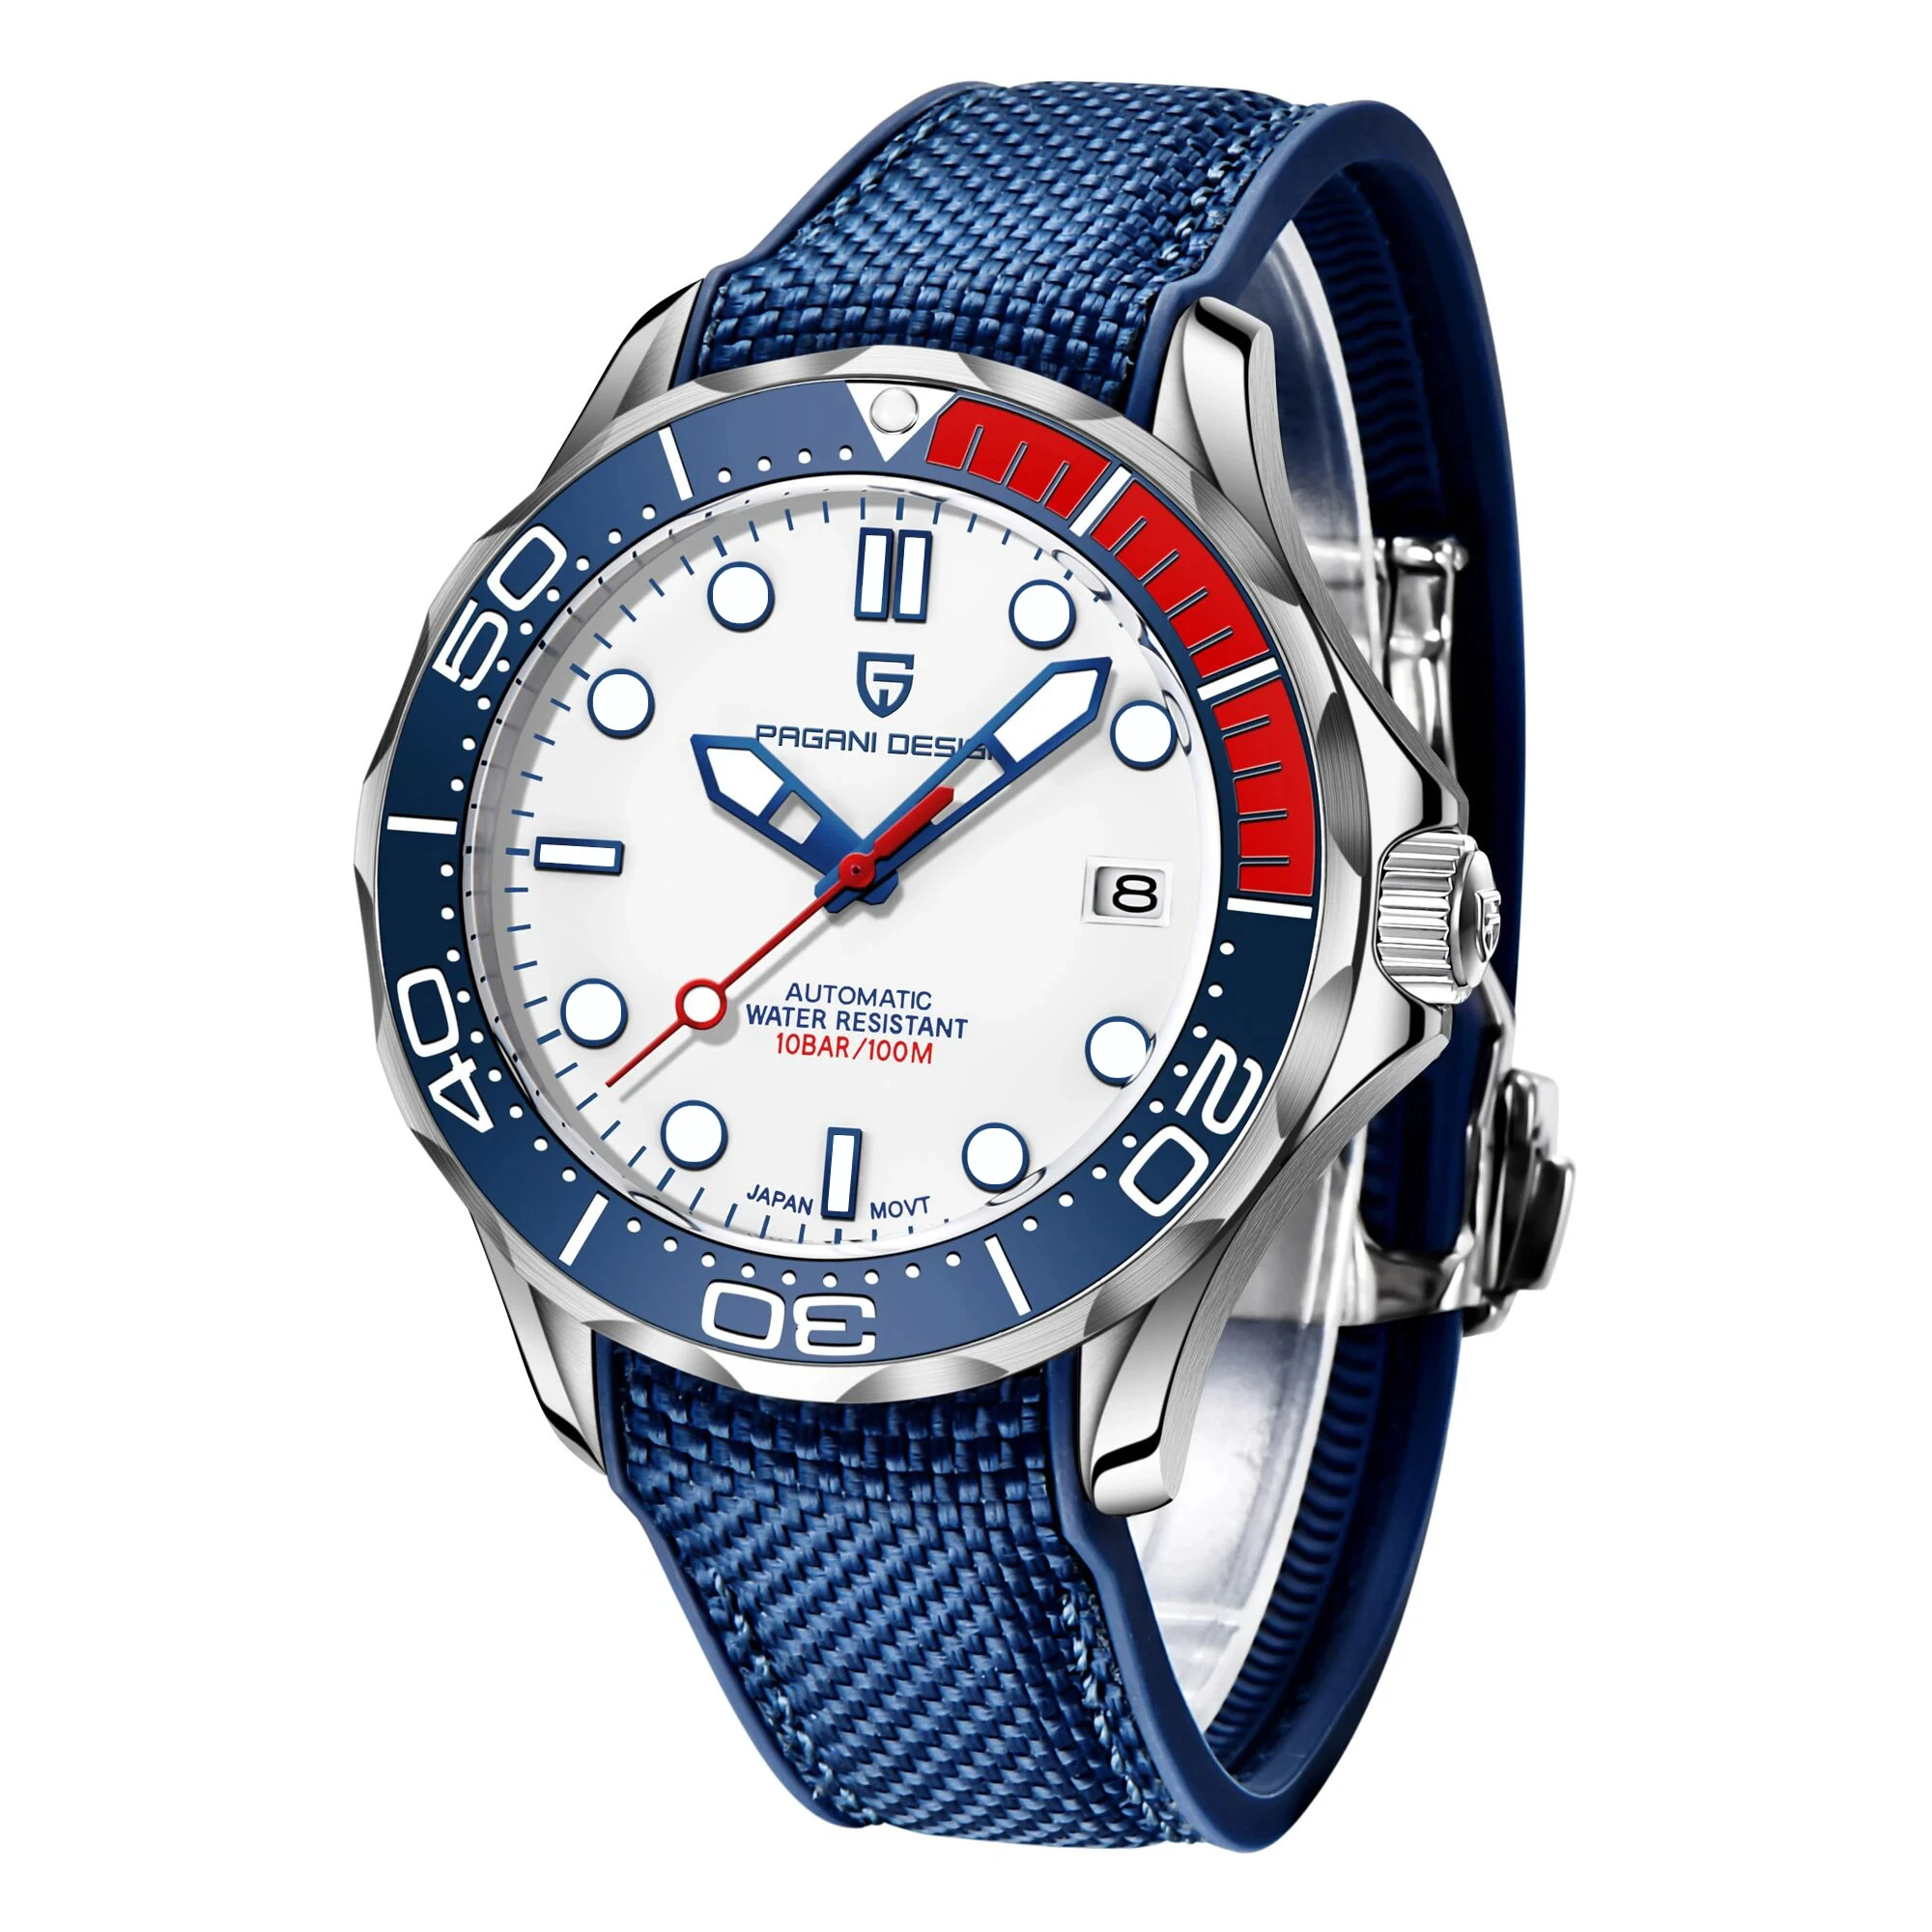 New 007 Mesh belt Watches Luxury Automatic Watch For Men Fashion Mechani... - $325.33